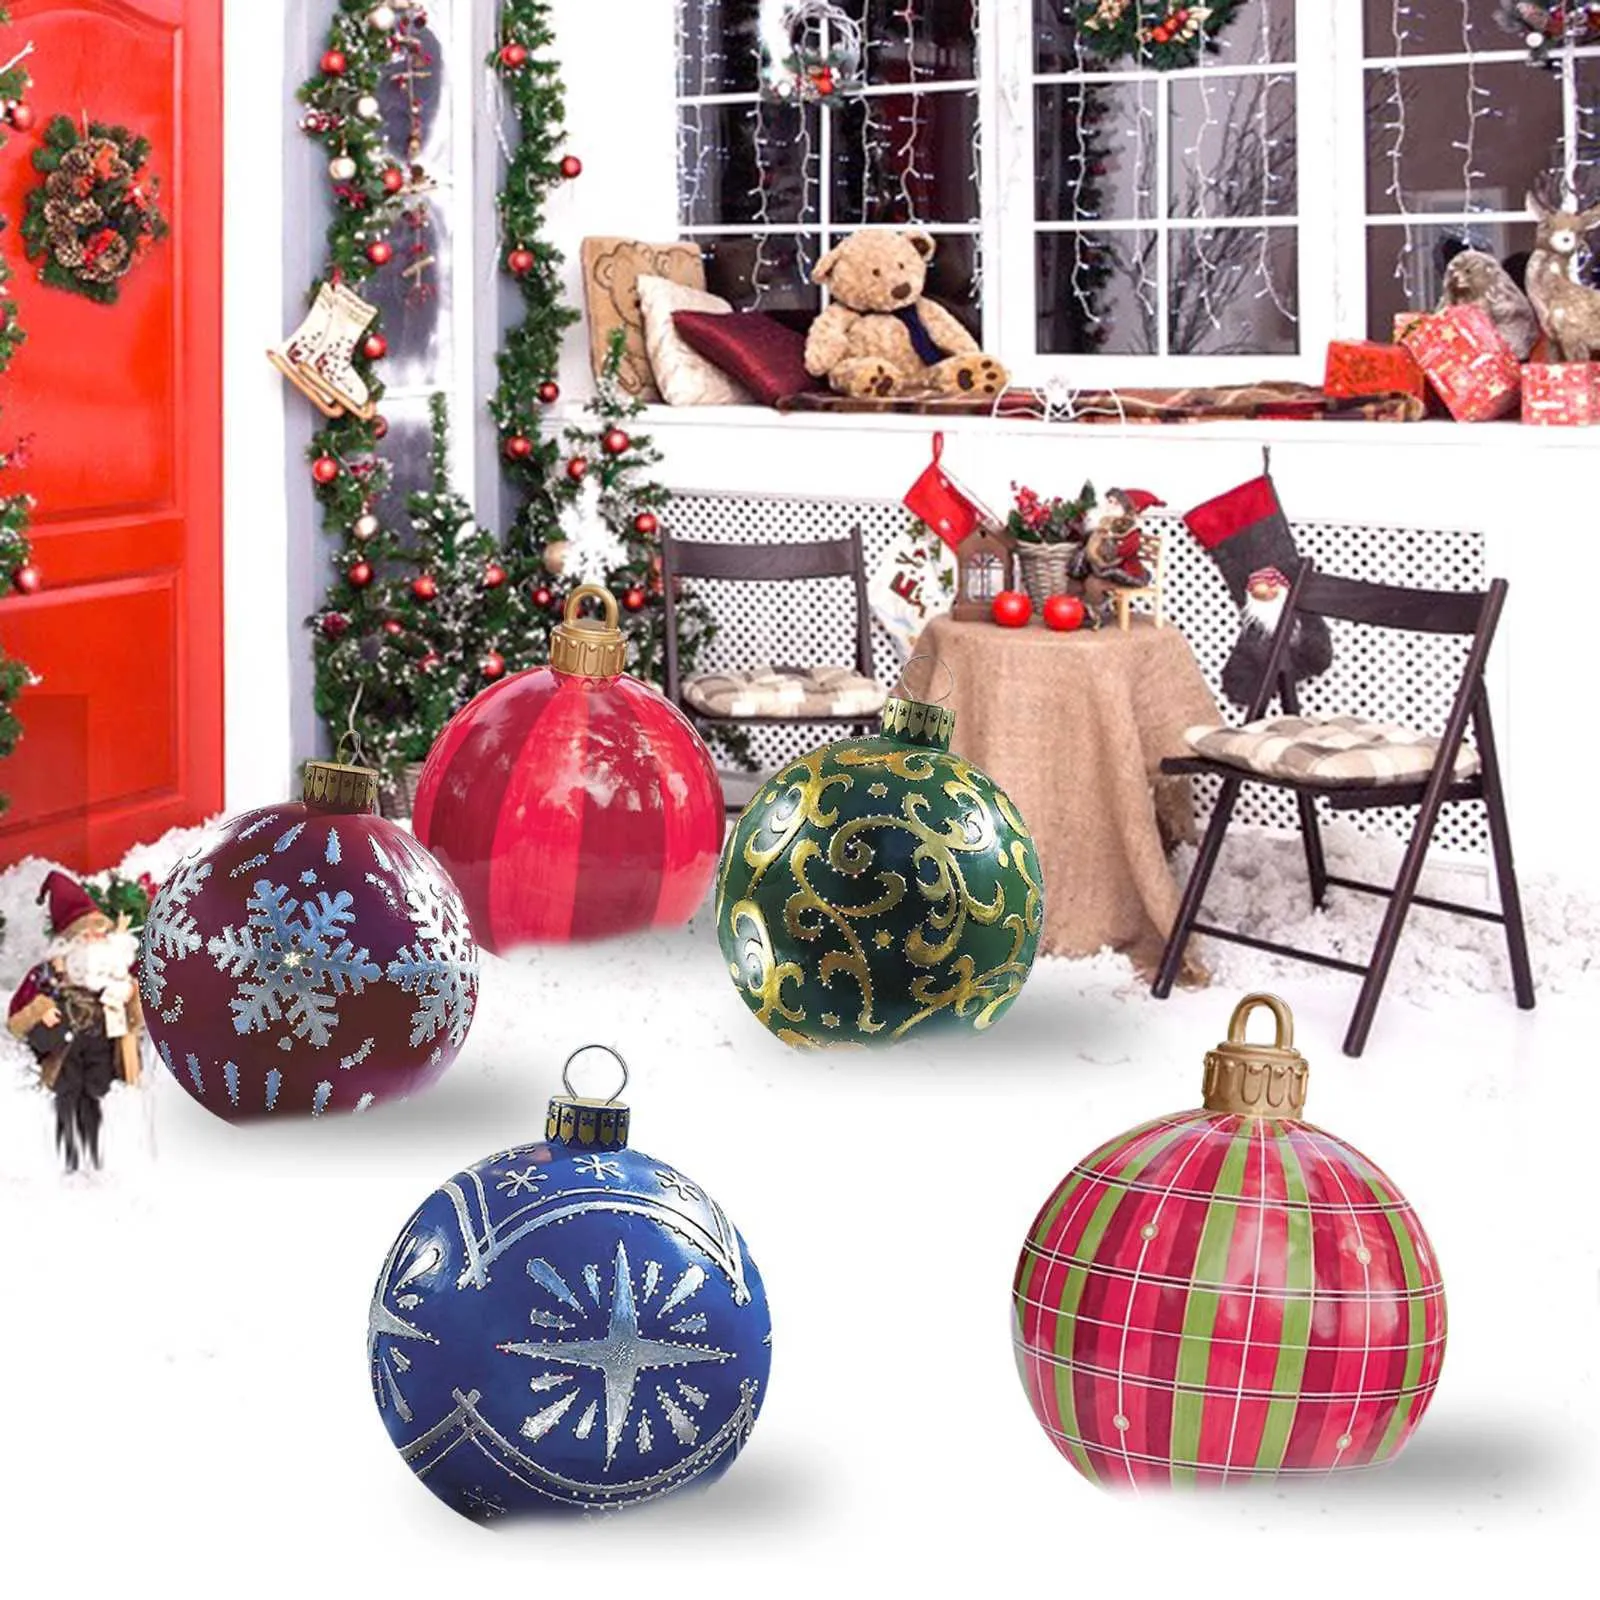 PVCで作られた屋外クリスマスインフレータブル装飾ボール23 6インチジャイアントツリーデコレーションホリデー装飾211018327U